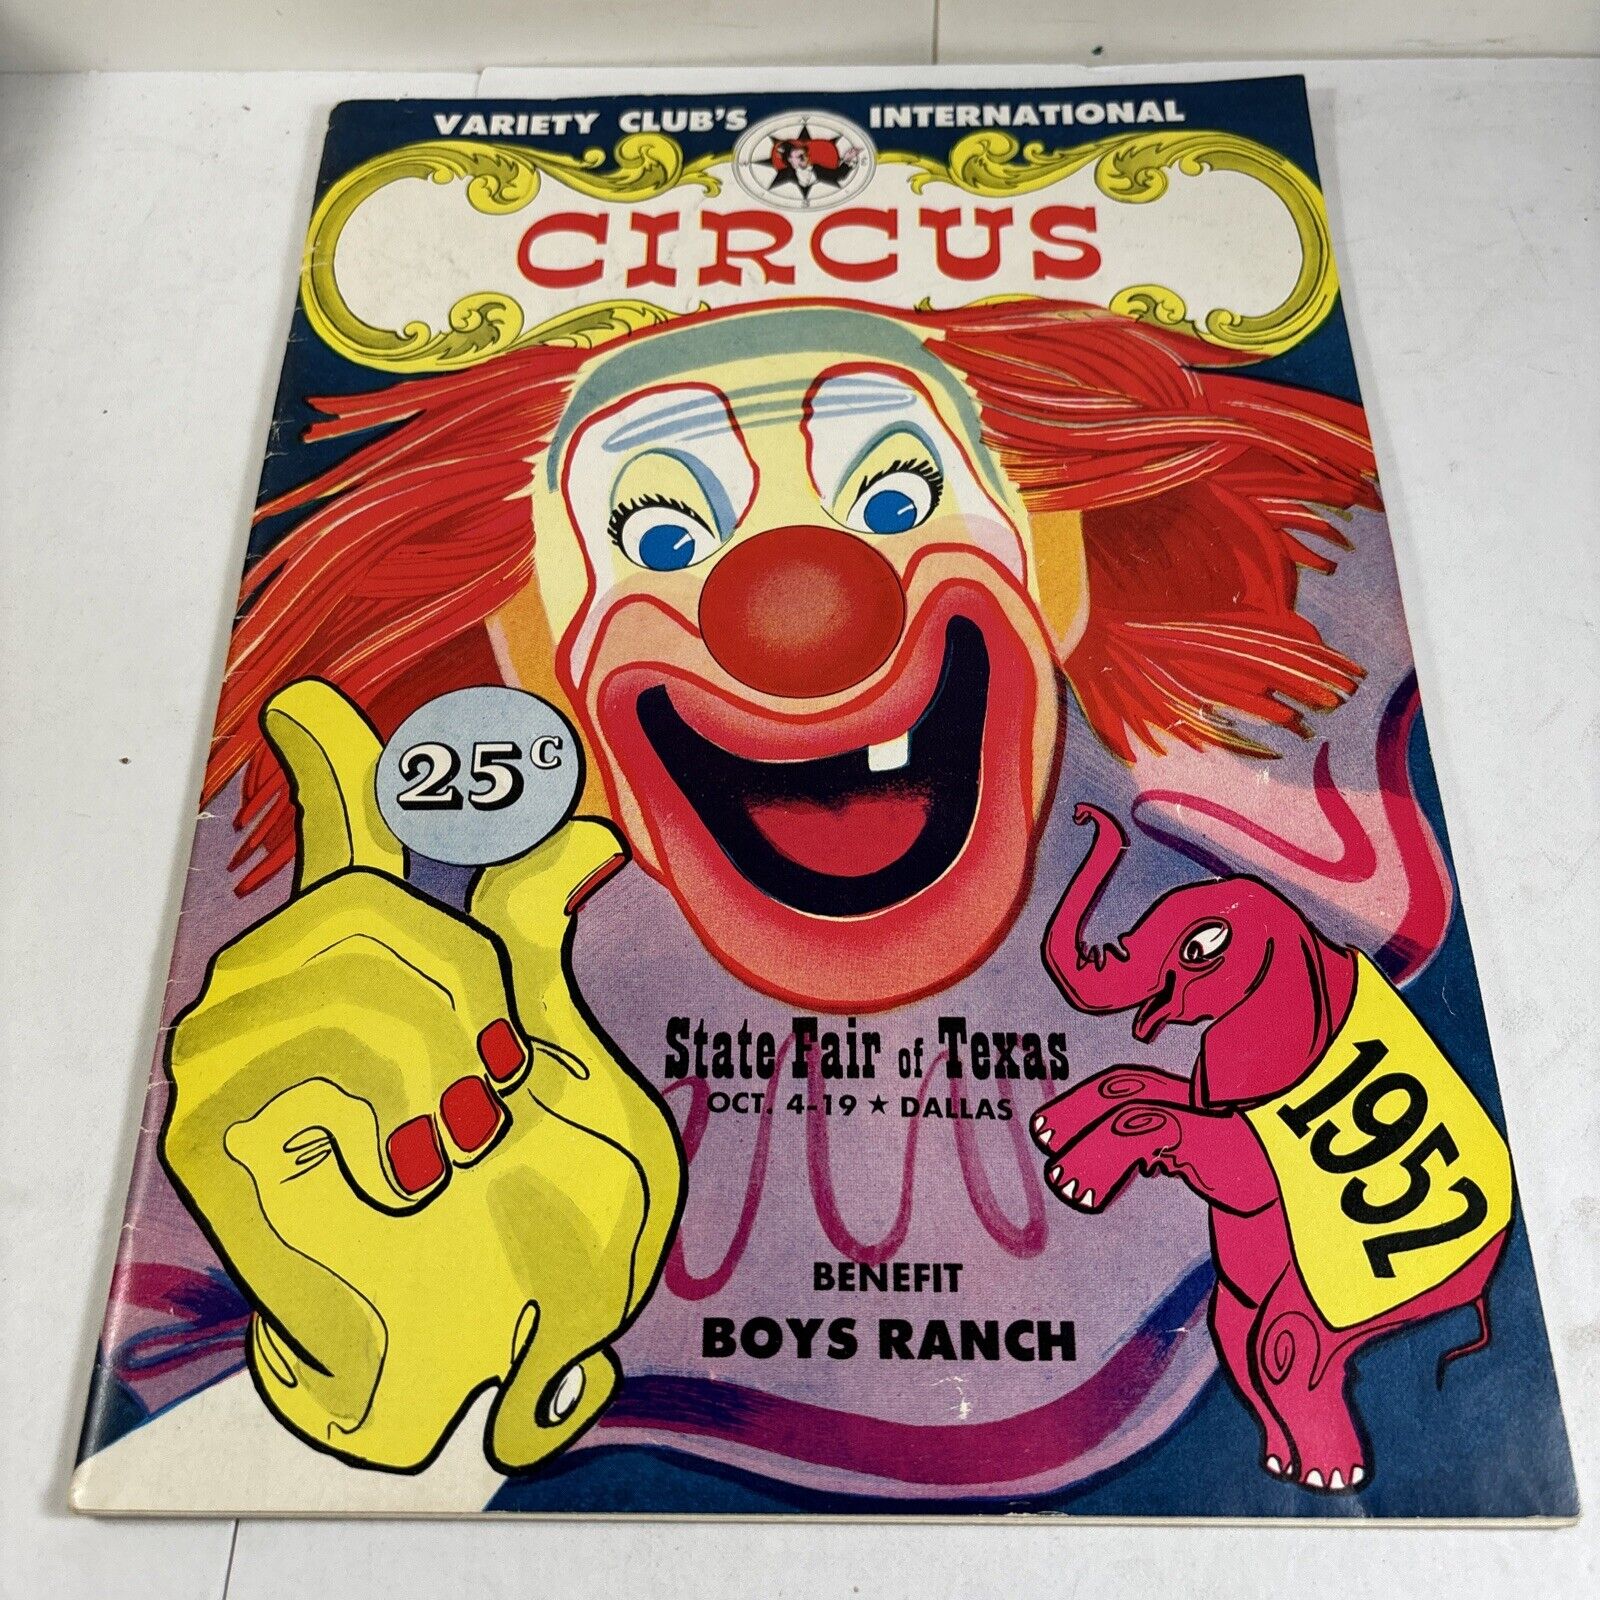 State Fair Texas Oct 4-19 1952 Circus Variety Club International Program